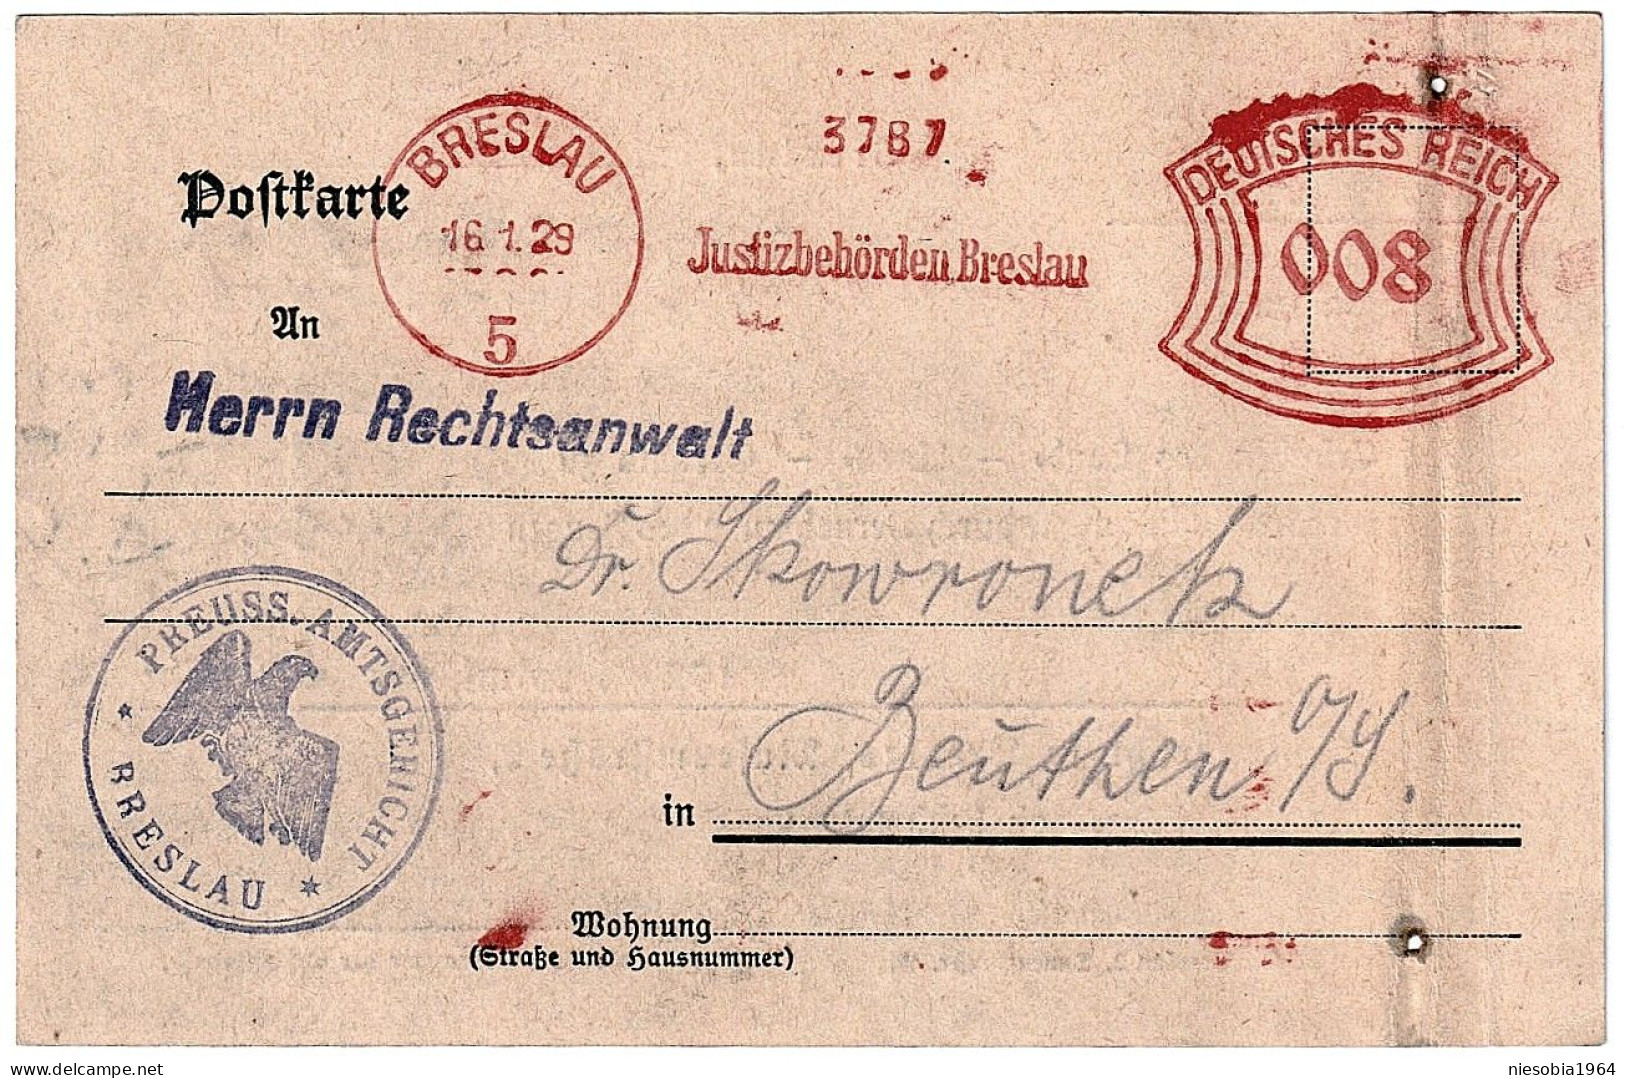 Prussia. Breslau District Court Companies Postcard Special Seal Judicial Authorities Breslau DR 008 - June 16, 1929 - Cartoline